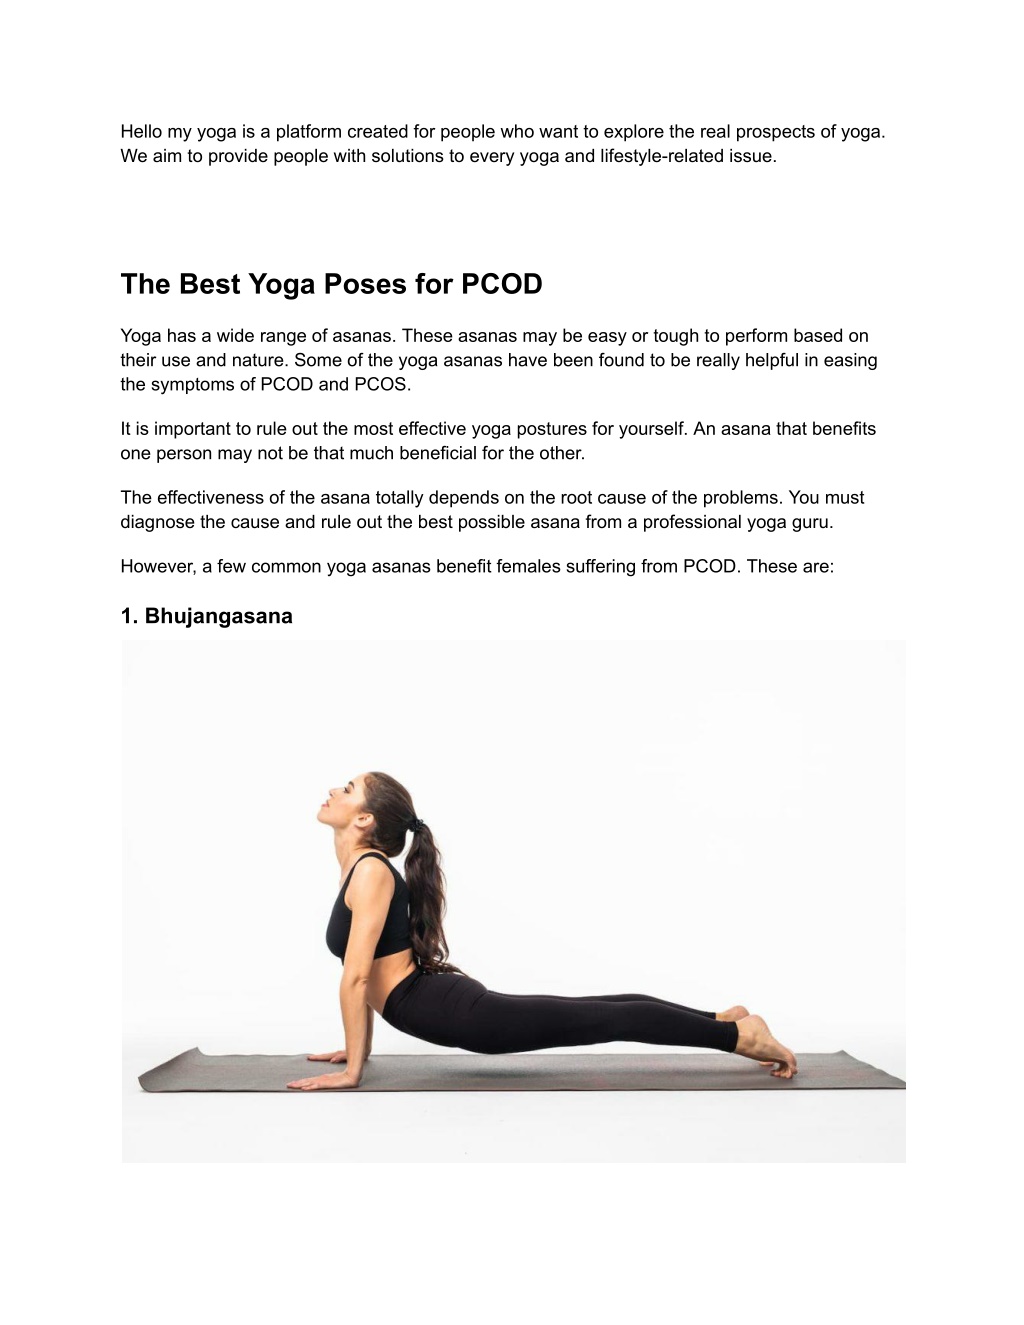 Ways to get rid of arm fat through yoga asanas